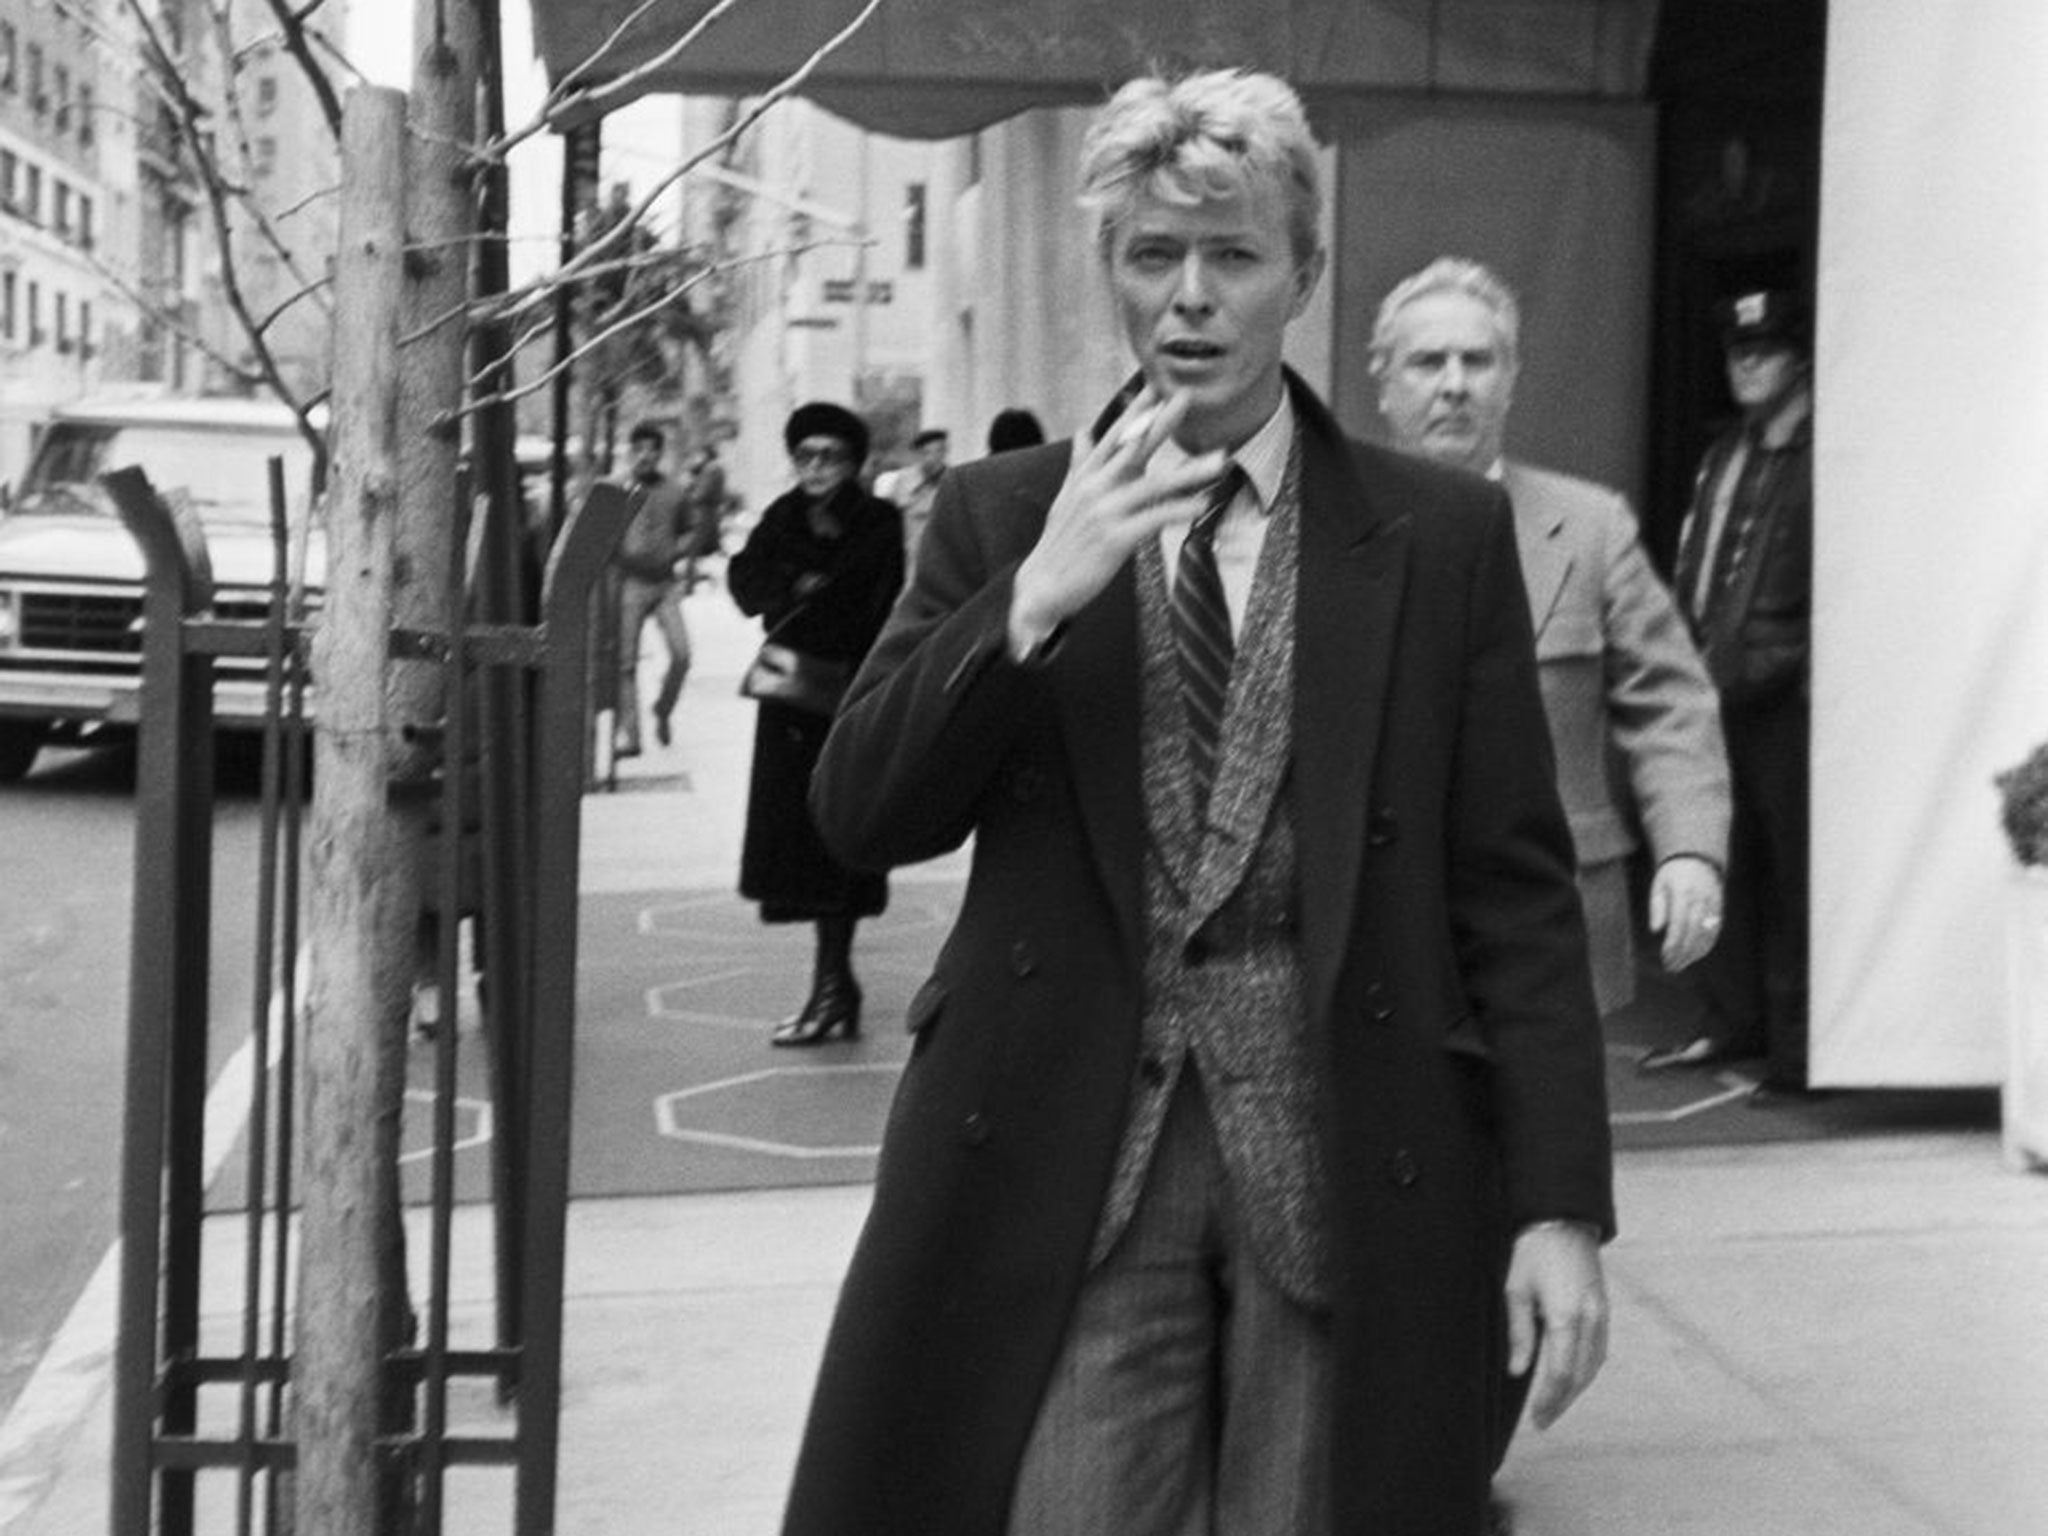 Bowie in New York in around 1970